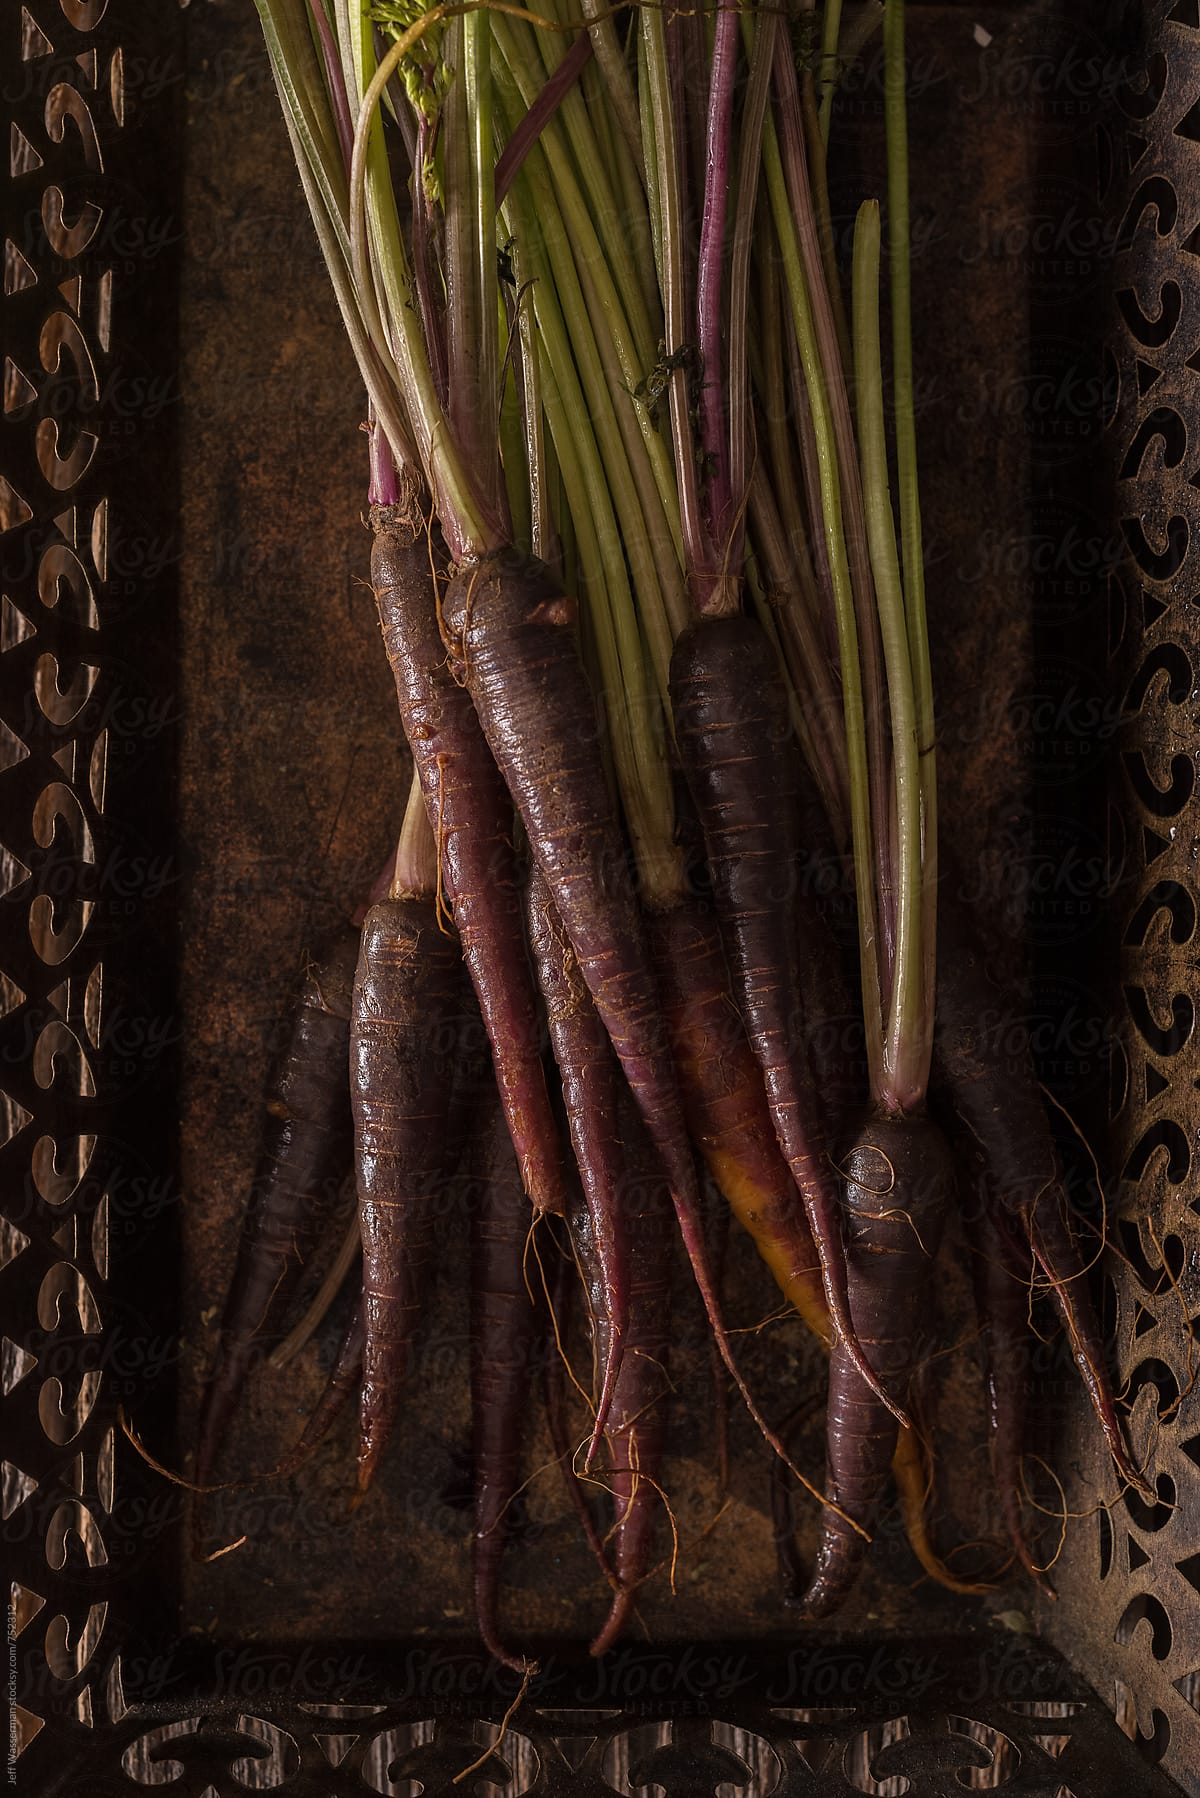 Purple Heirloom Carrots in Rustic Setting